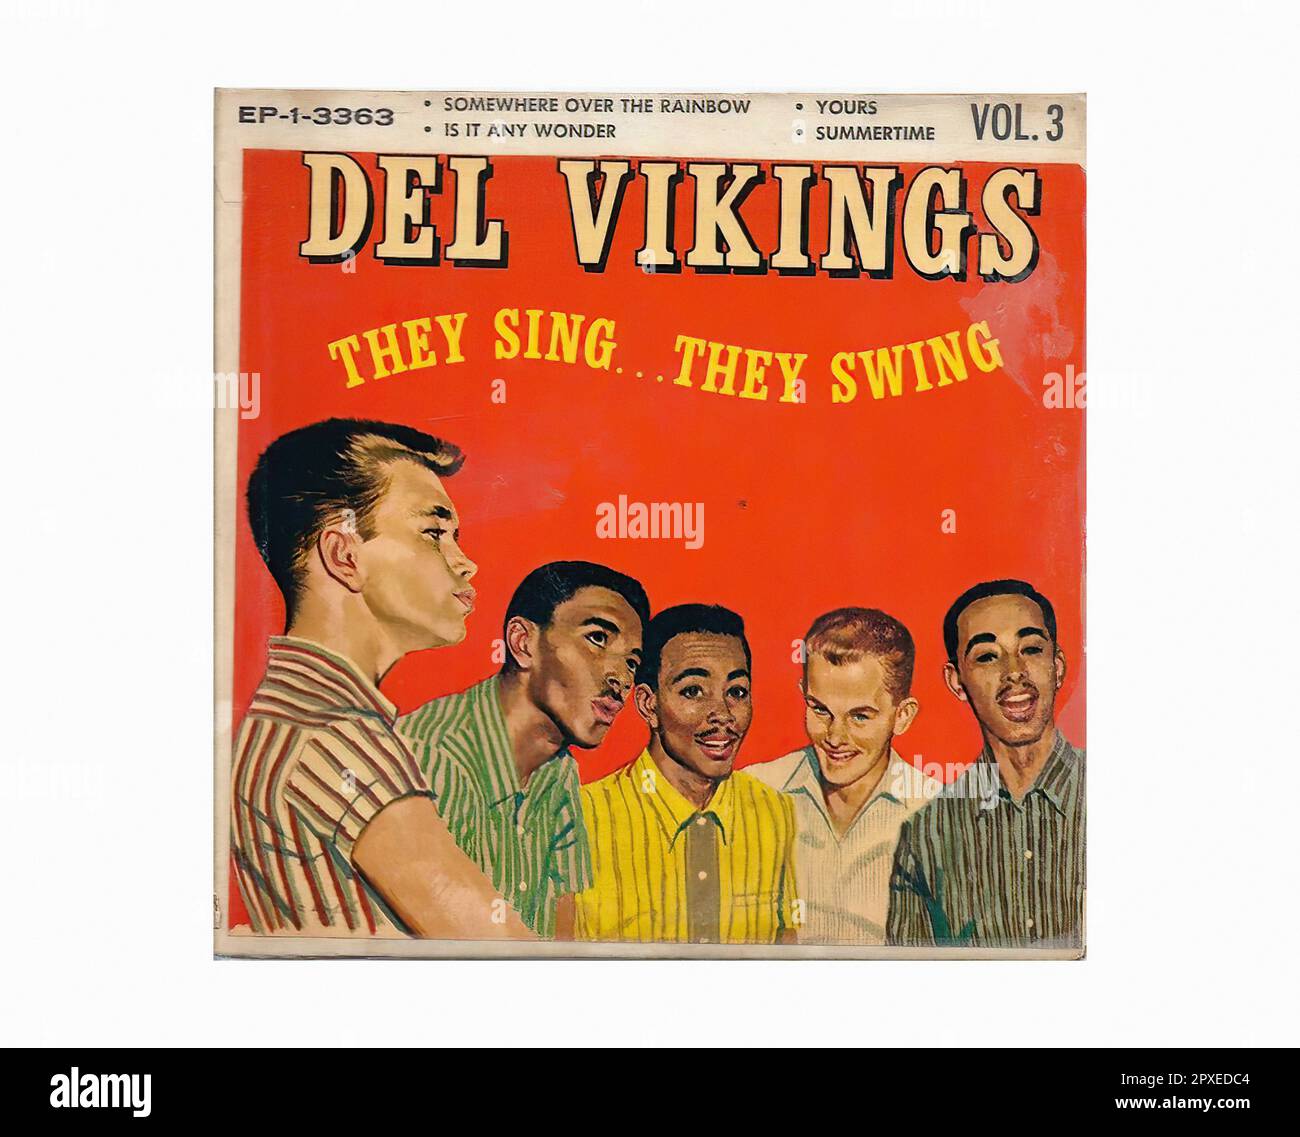 Del Vikings - 1957 01-1 A - Vintage 45 R.P.M Music Vinyl Record Stock Photo